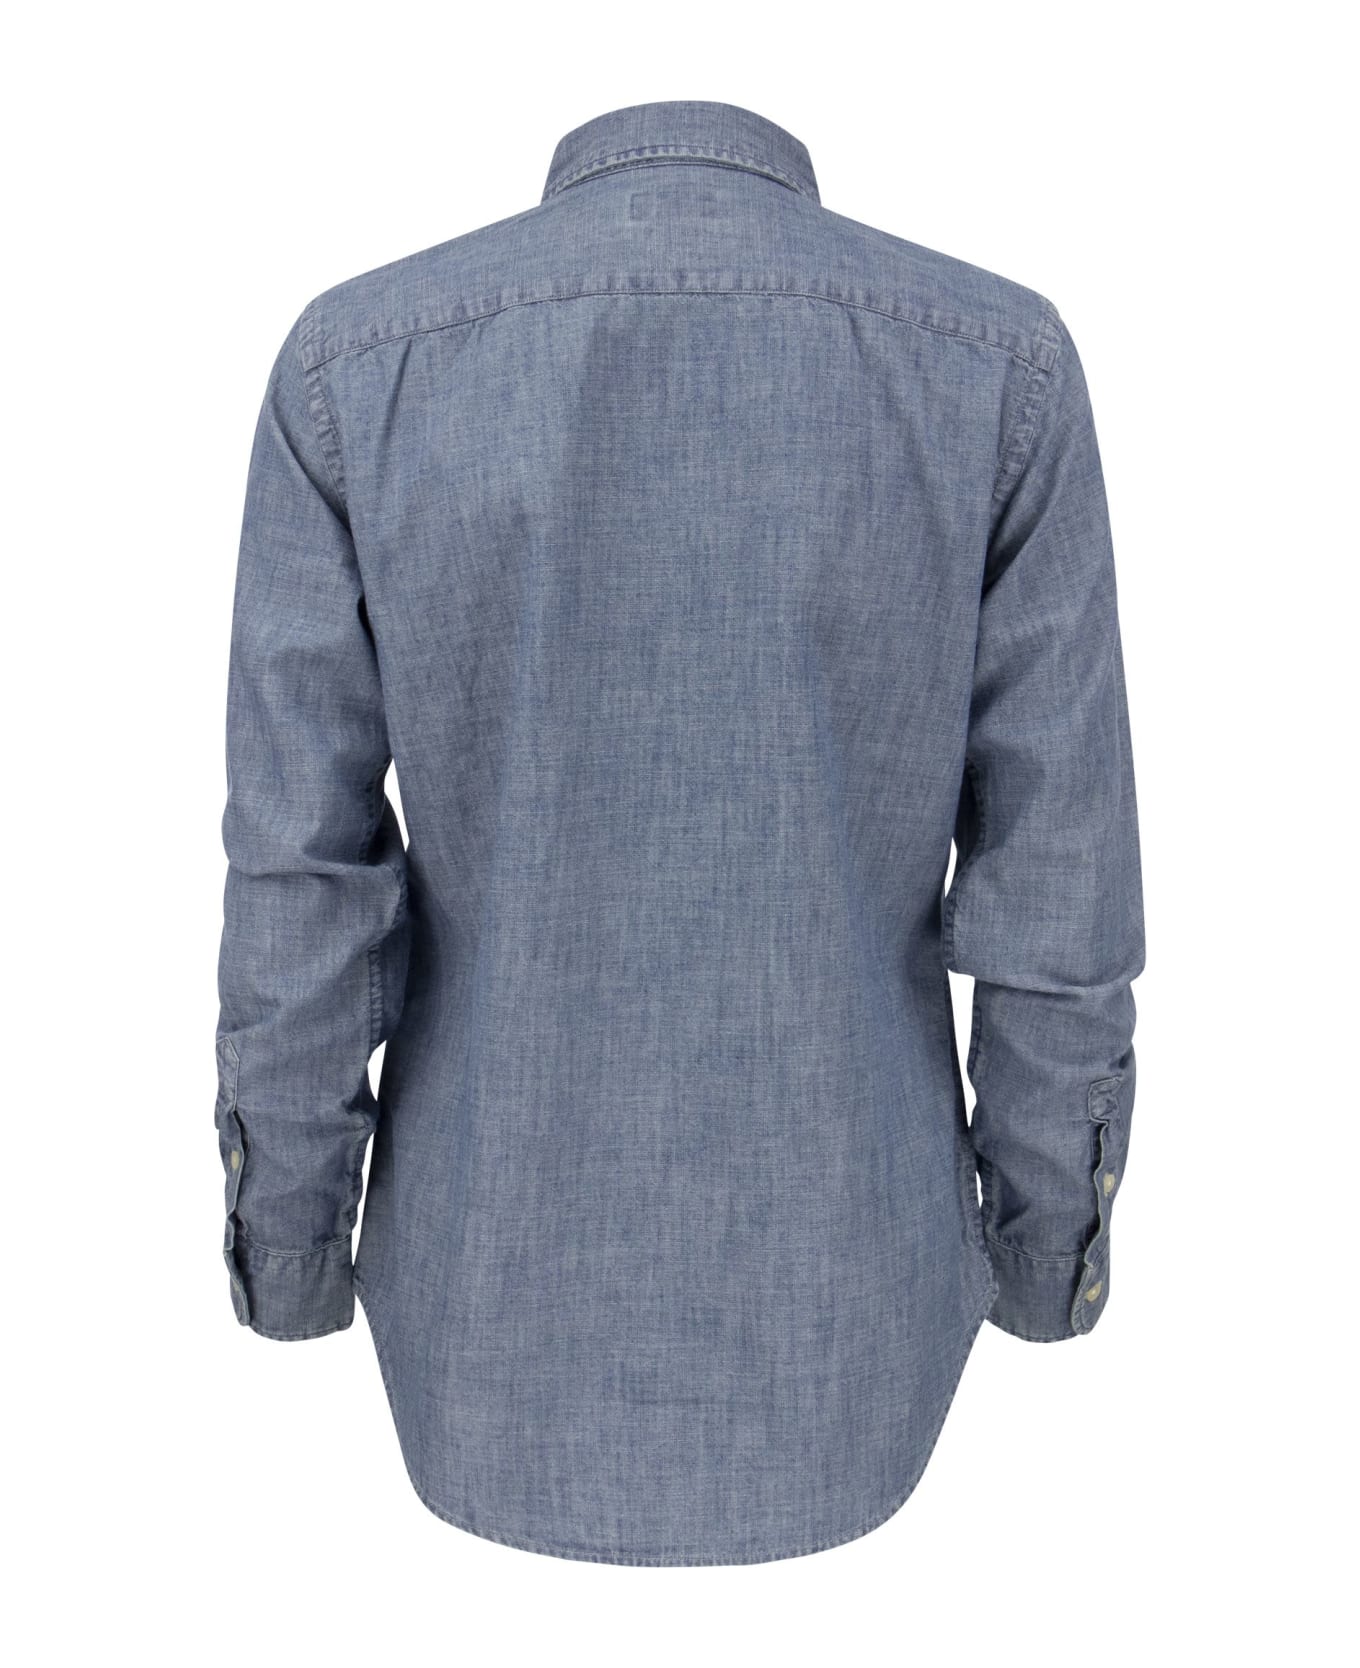 Ralph Lauren Shirt In Indigo Cotton Chambray - Light Blue シャツ